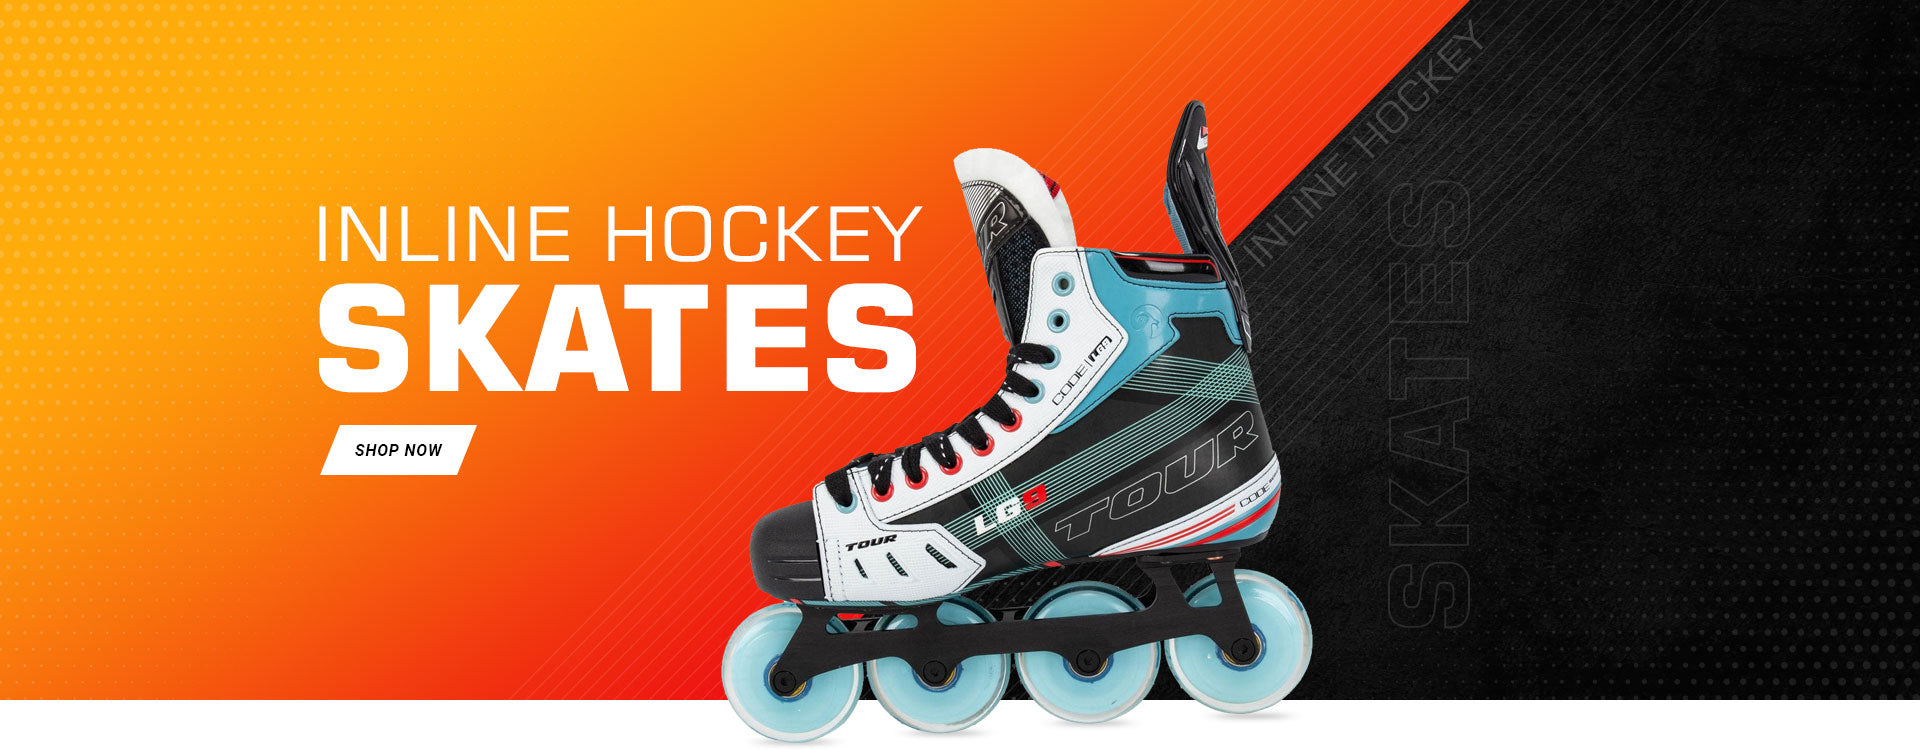 Inline Hockey Girdles - Buy Online